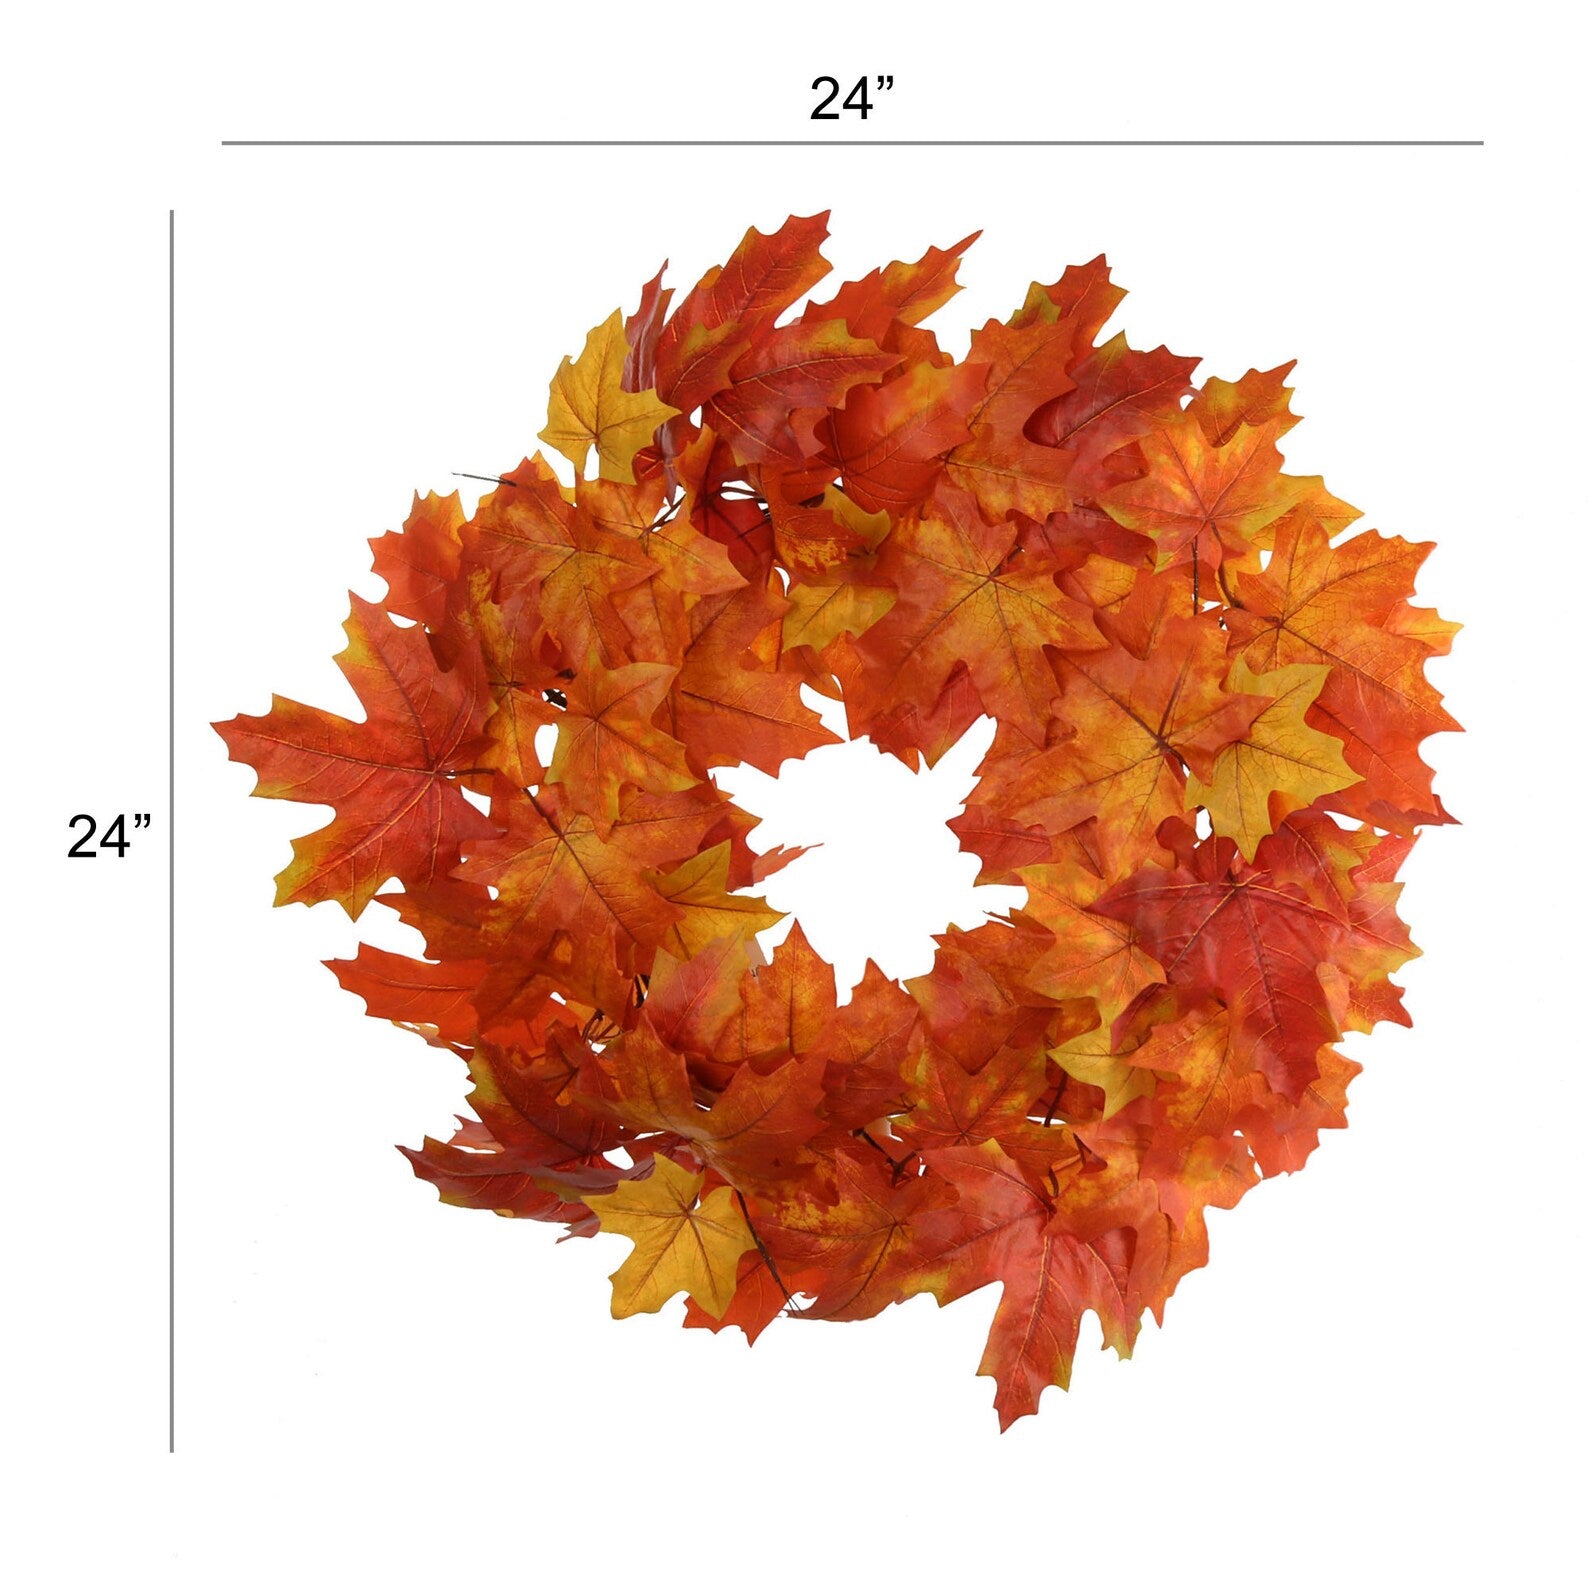 24" Fall Maple Leaf Wreath in Multi Colored Orange Leaves Wreaths ArtificialFlowers   